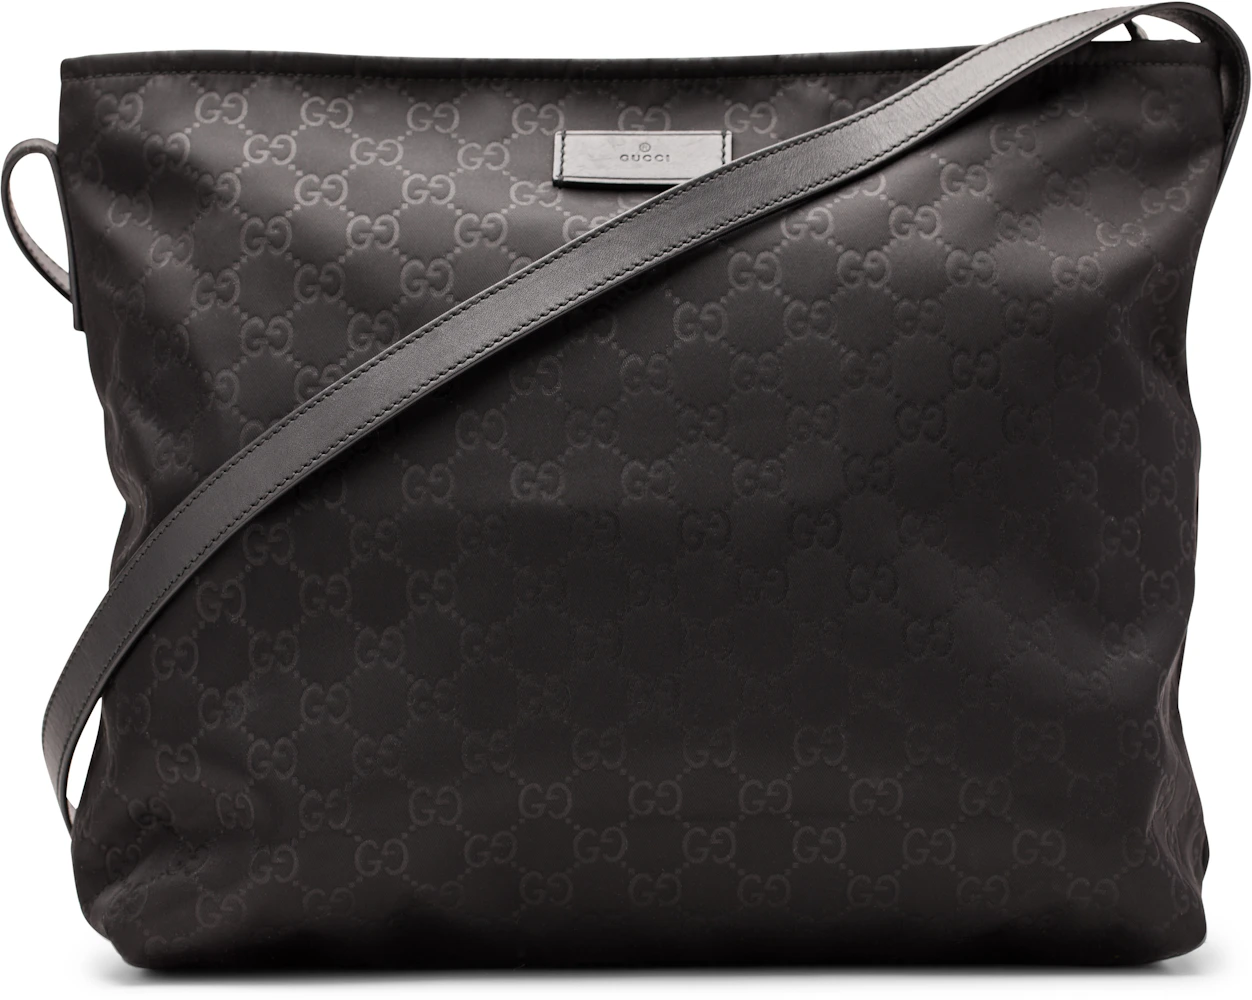 Louis Vuitton GG Supreme Night Courrier Messenger Bag in black